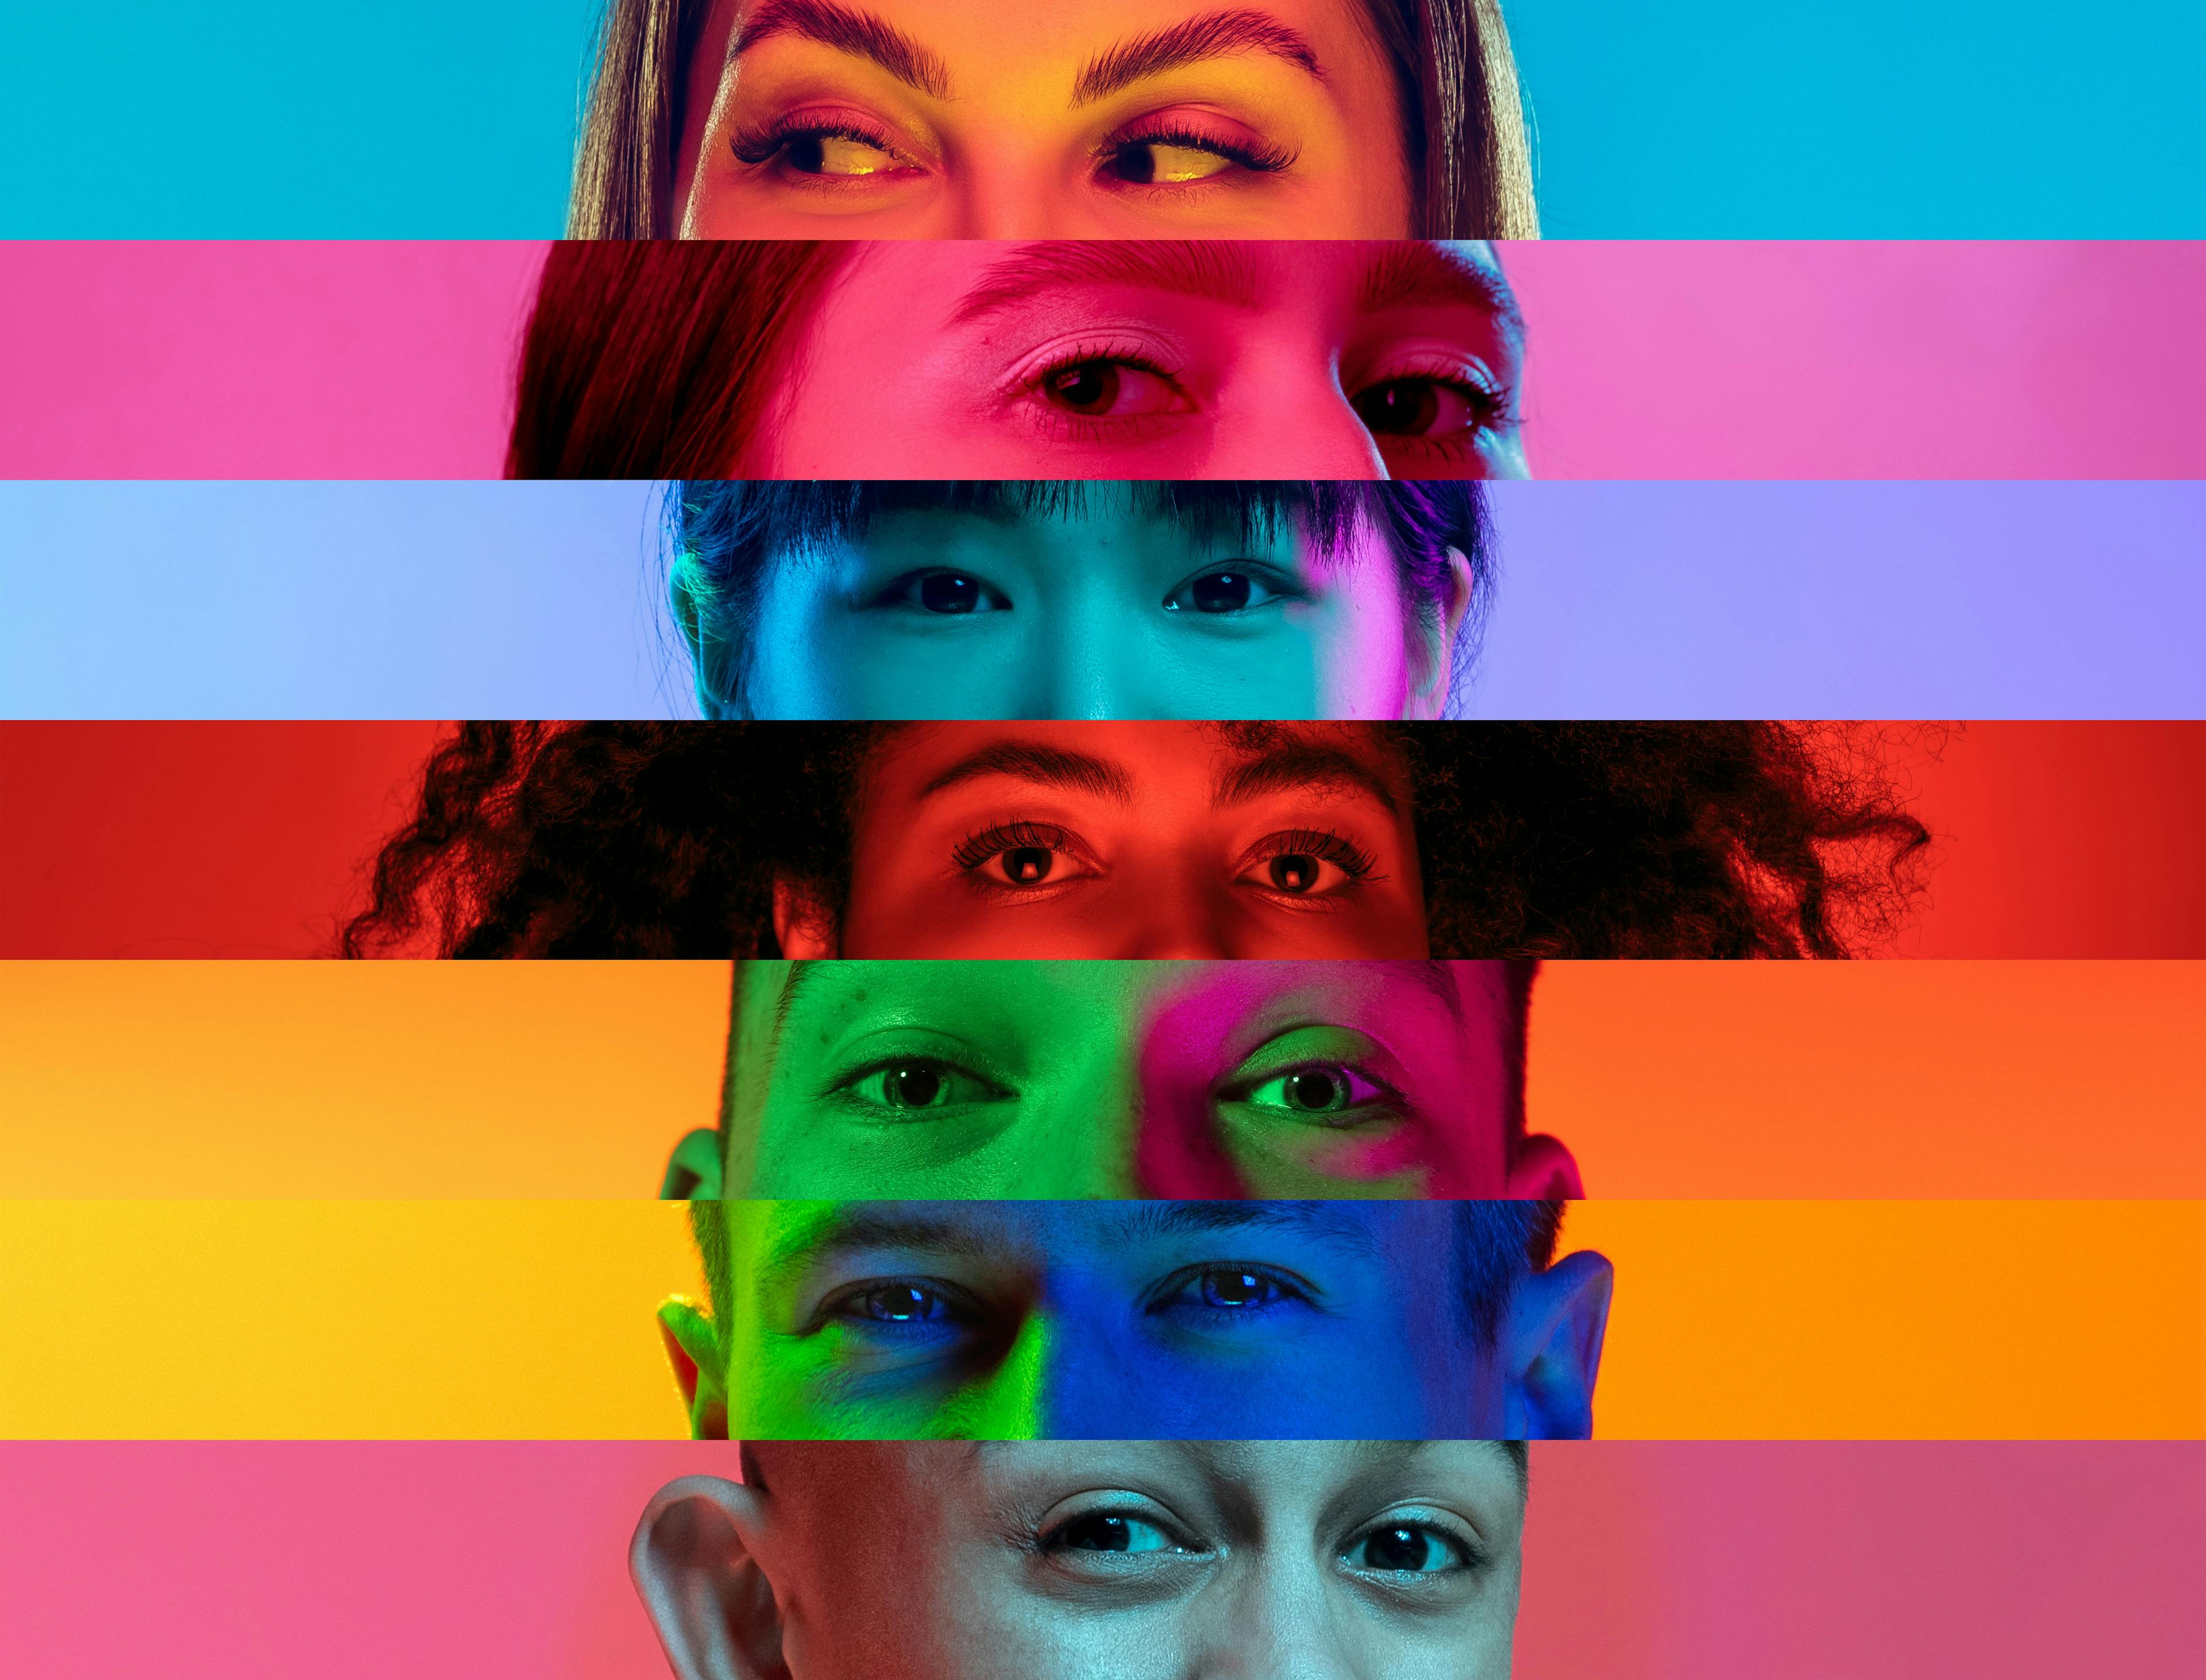 LGBTQ+ representation model | image credit: master1305 - stock.adobe.com